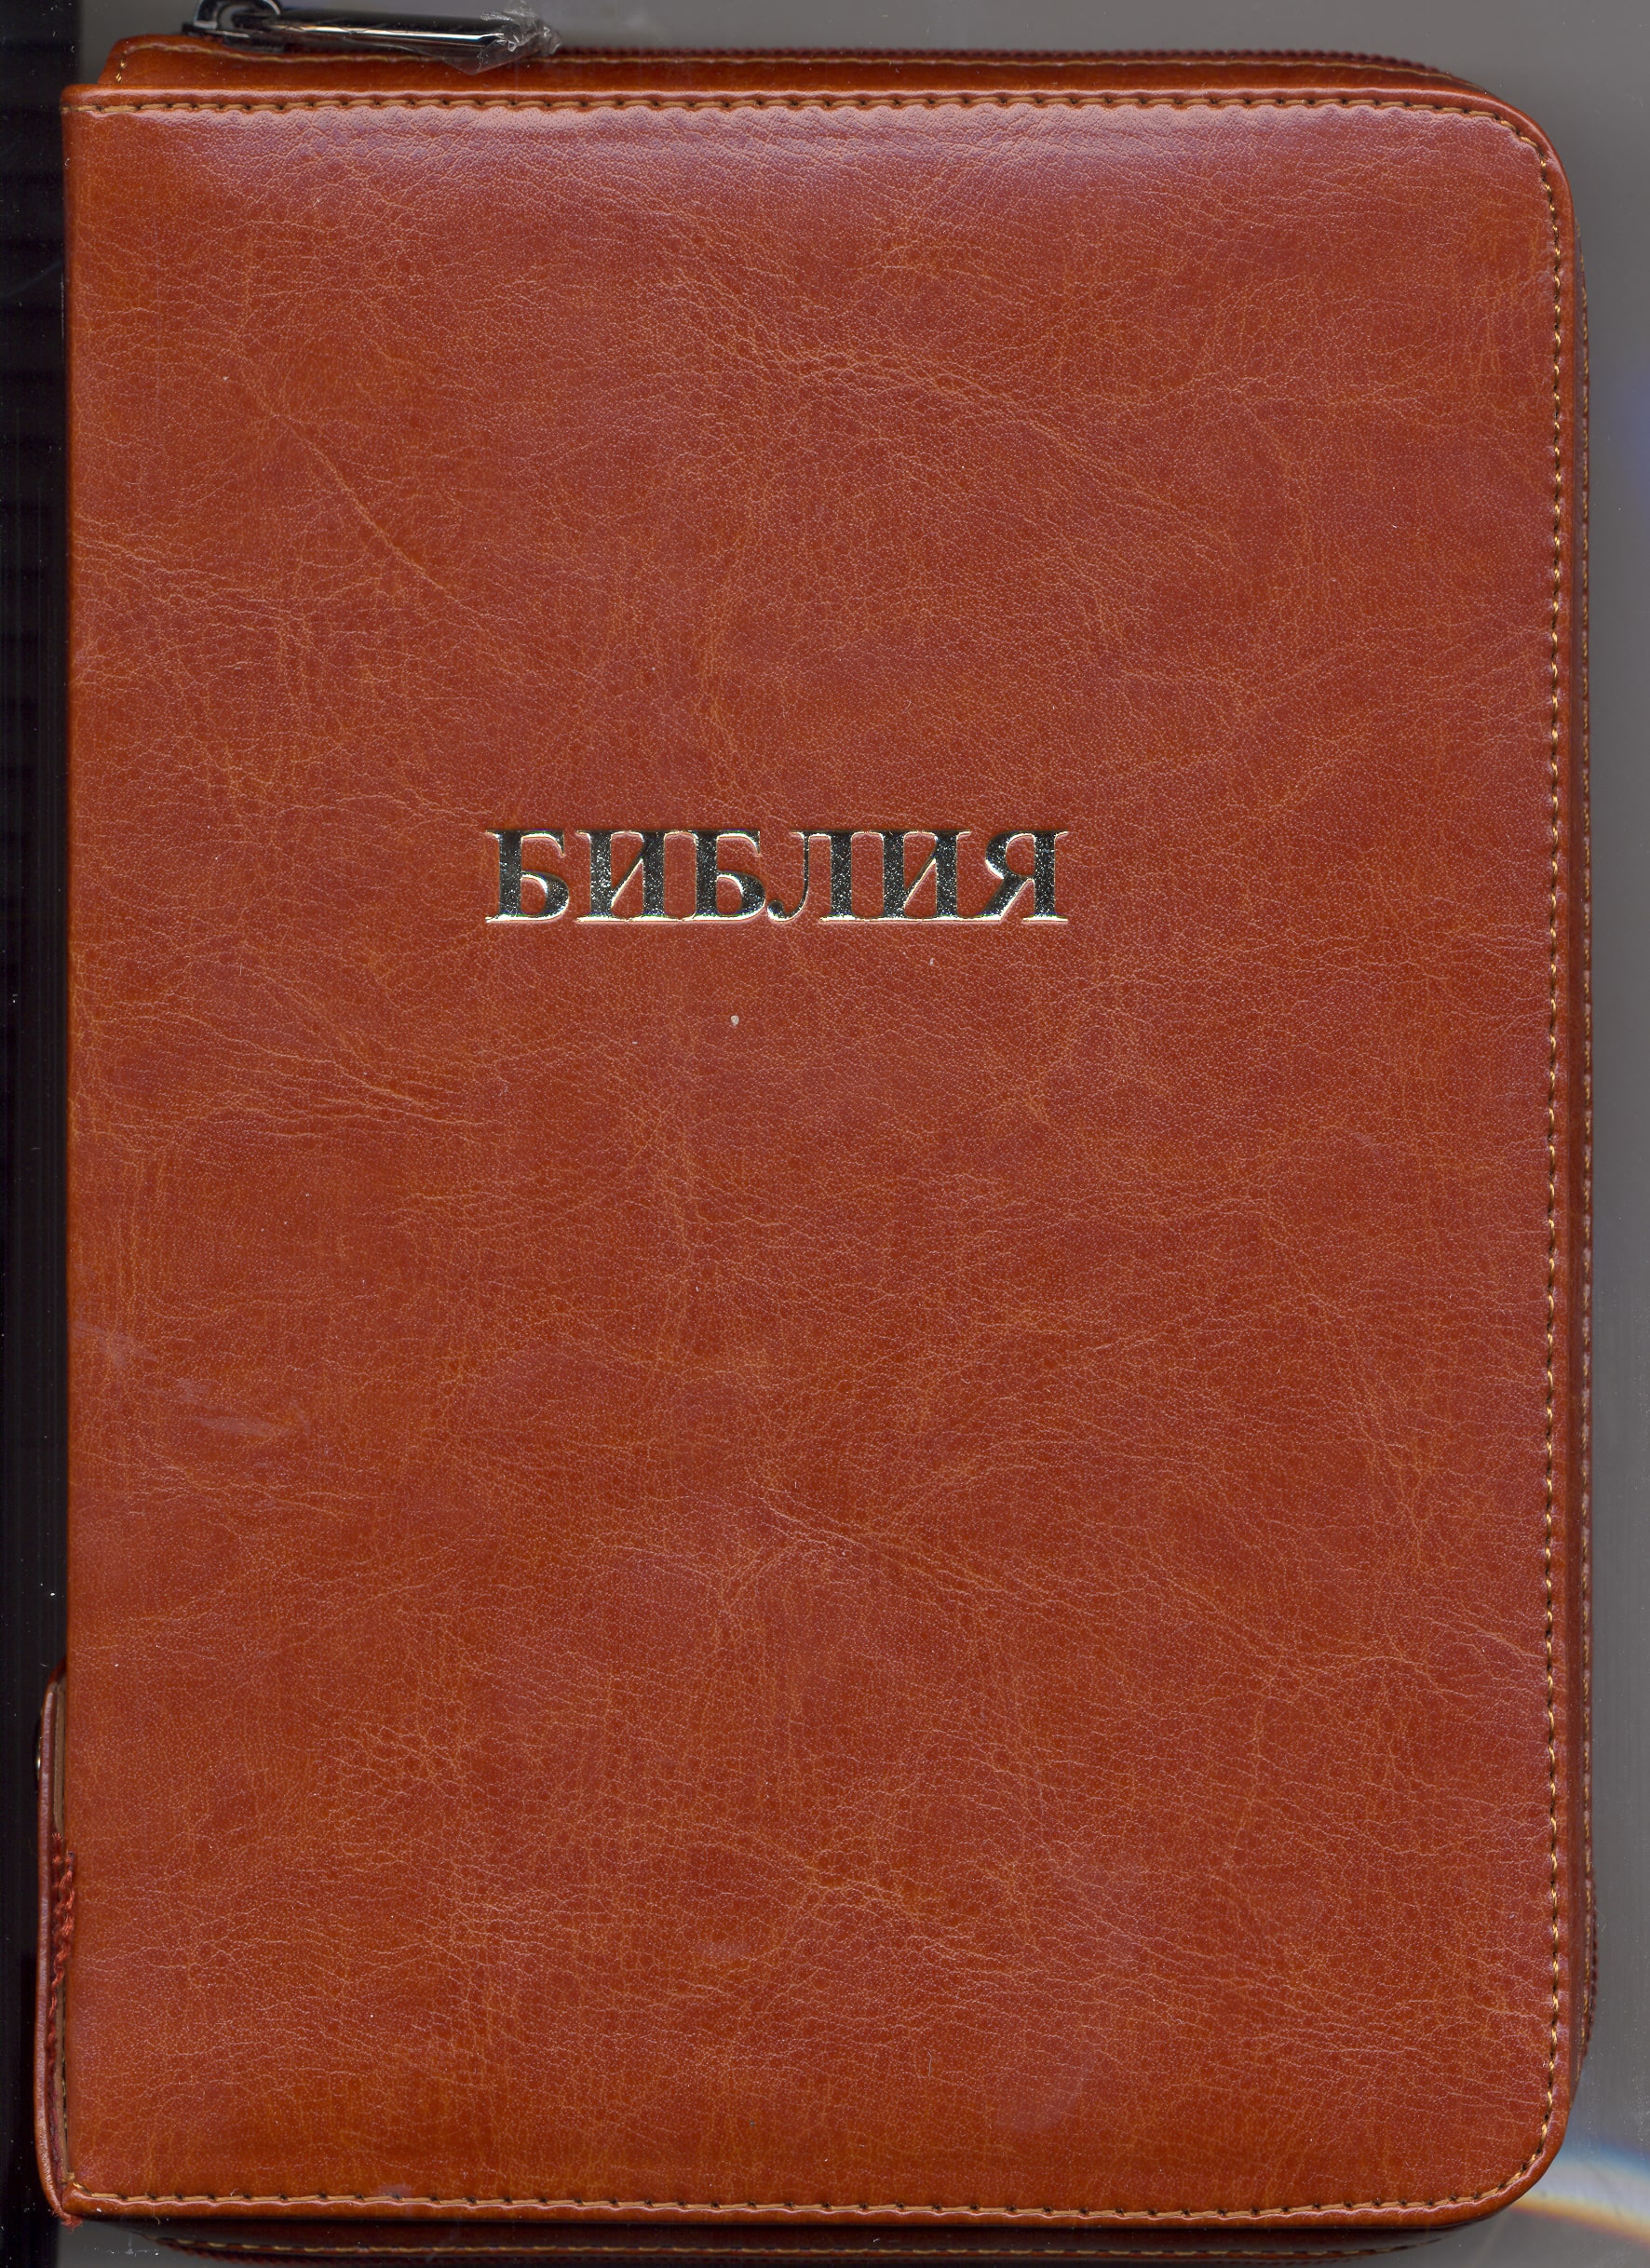 Compact Bible Form (5 x 7) brow imitation leather